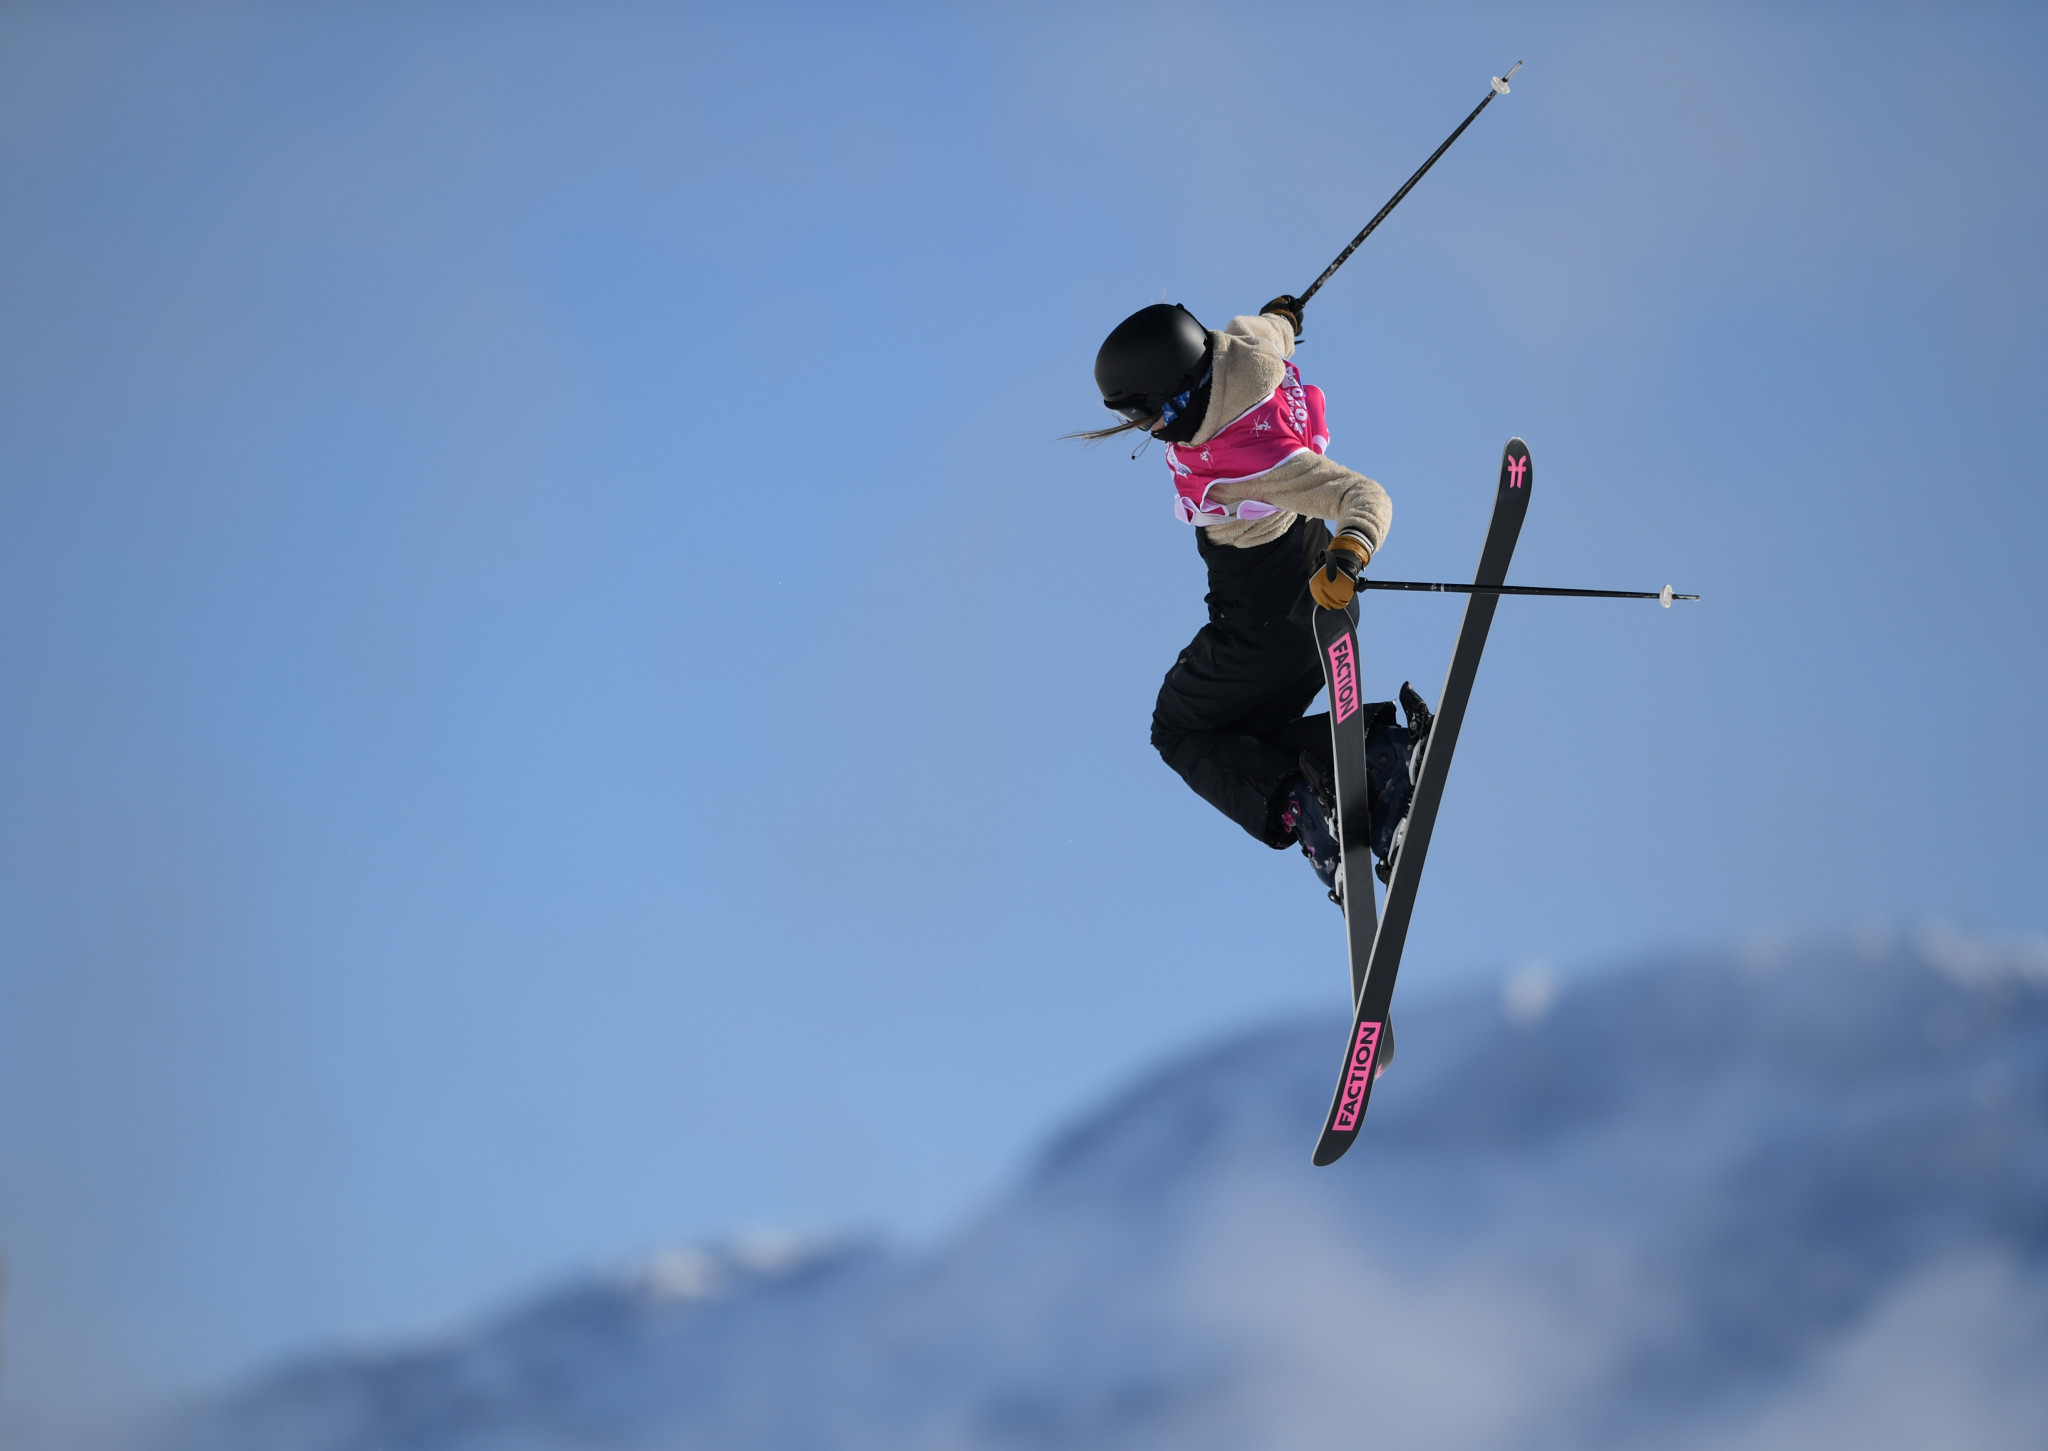 Sildaru strikes gold again at Winter X Games in Aspen